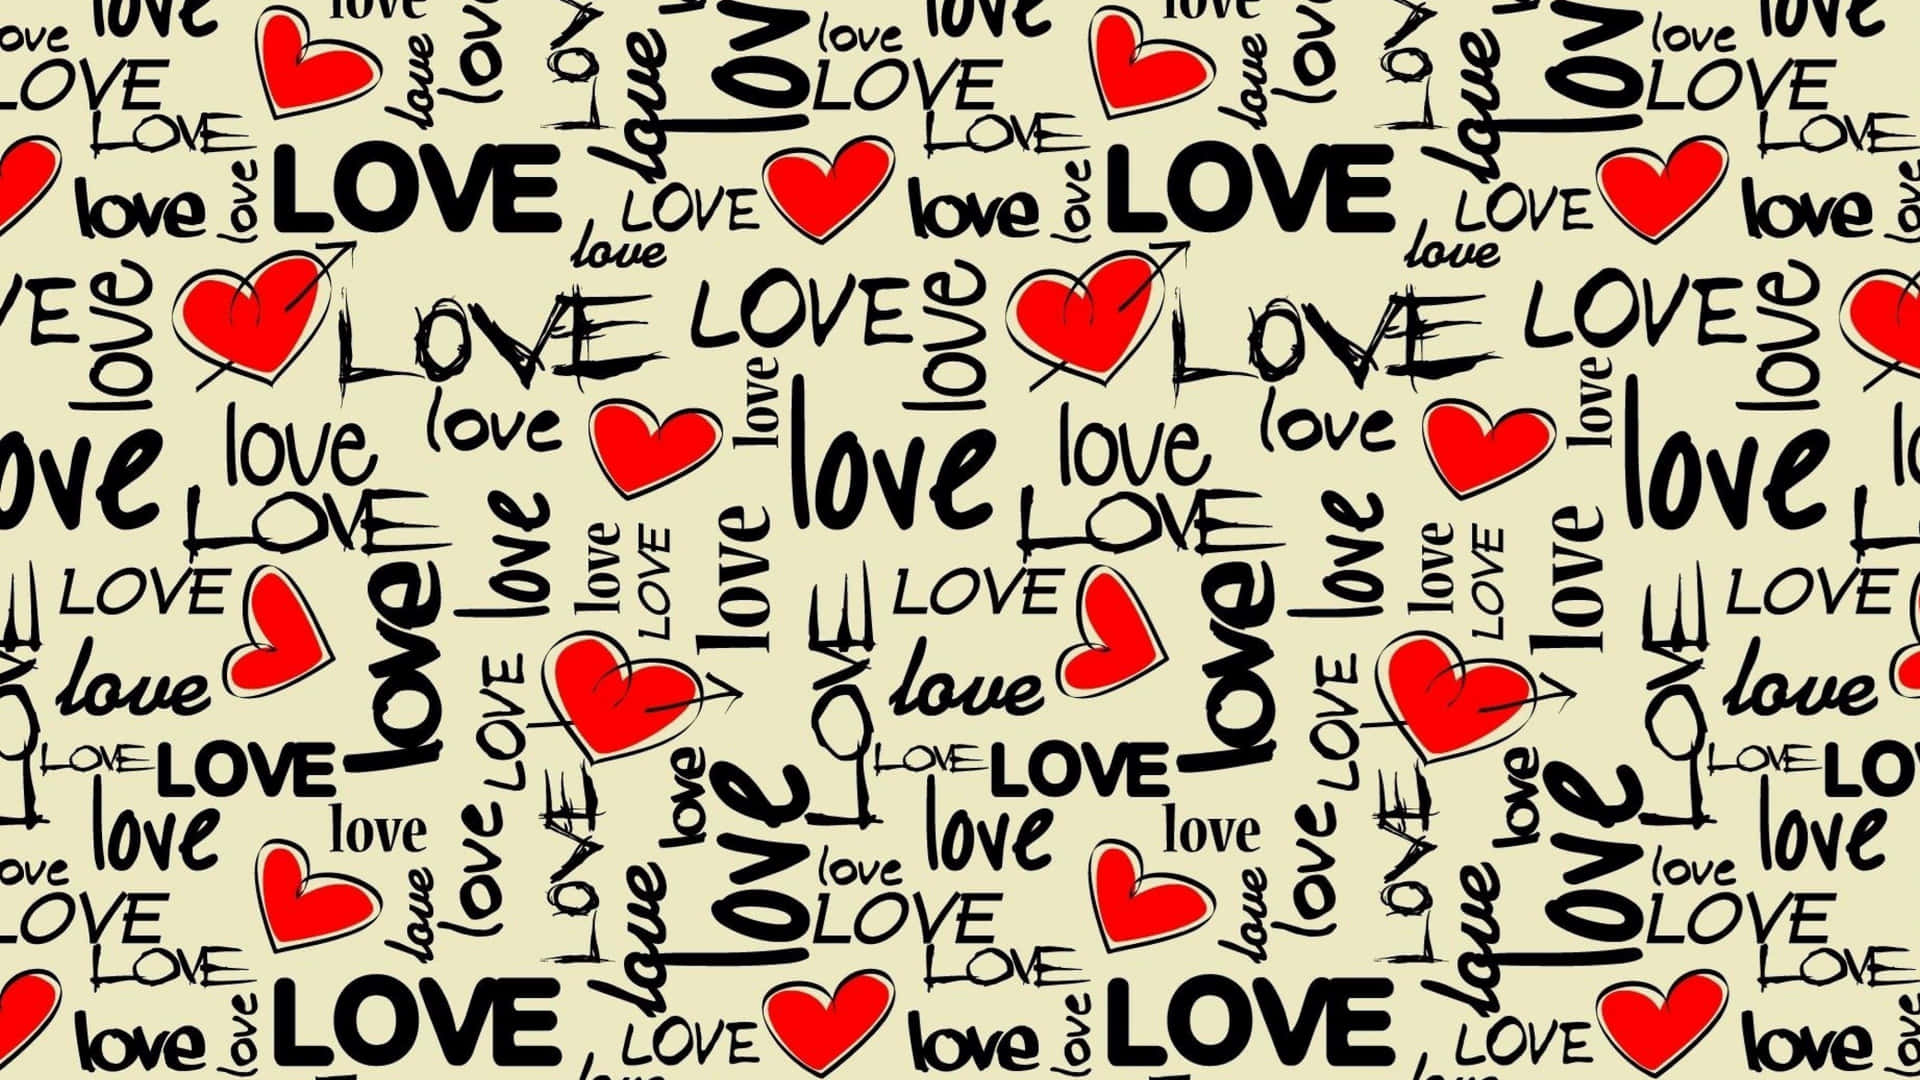 Spread love, not hatred Wallpaper